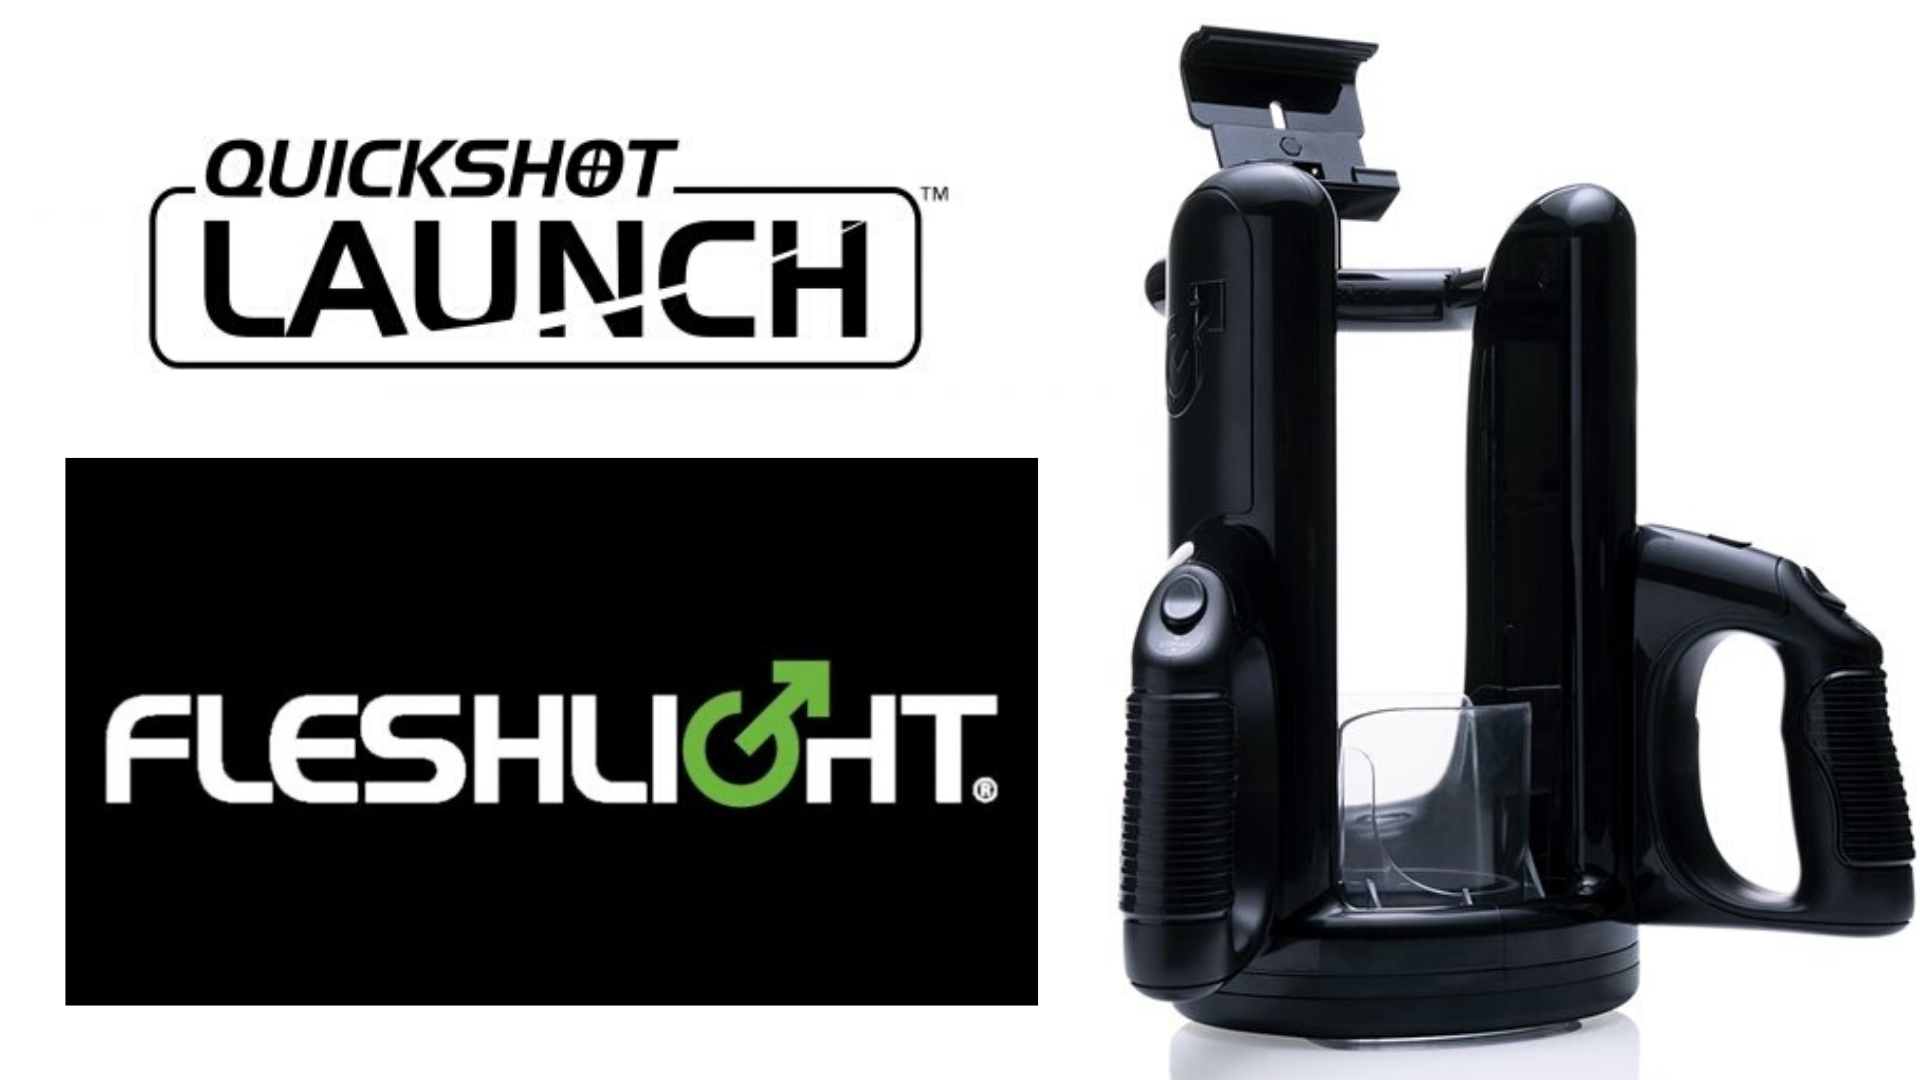 Fleshlight QuickShot Launch with Riley Reid Quickshot